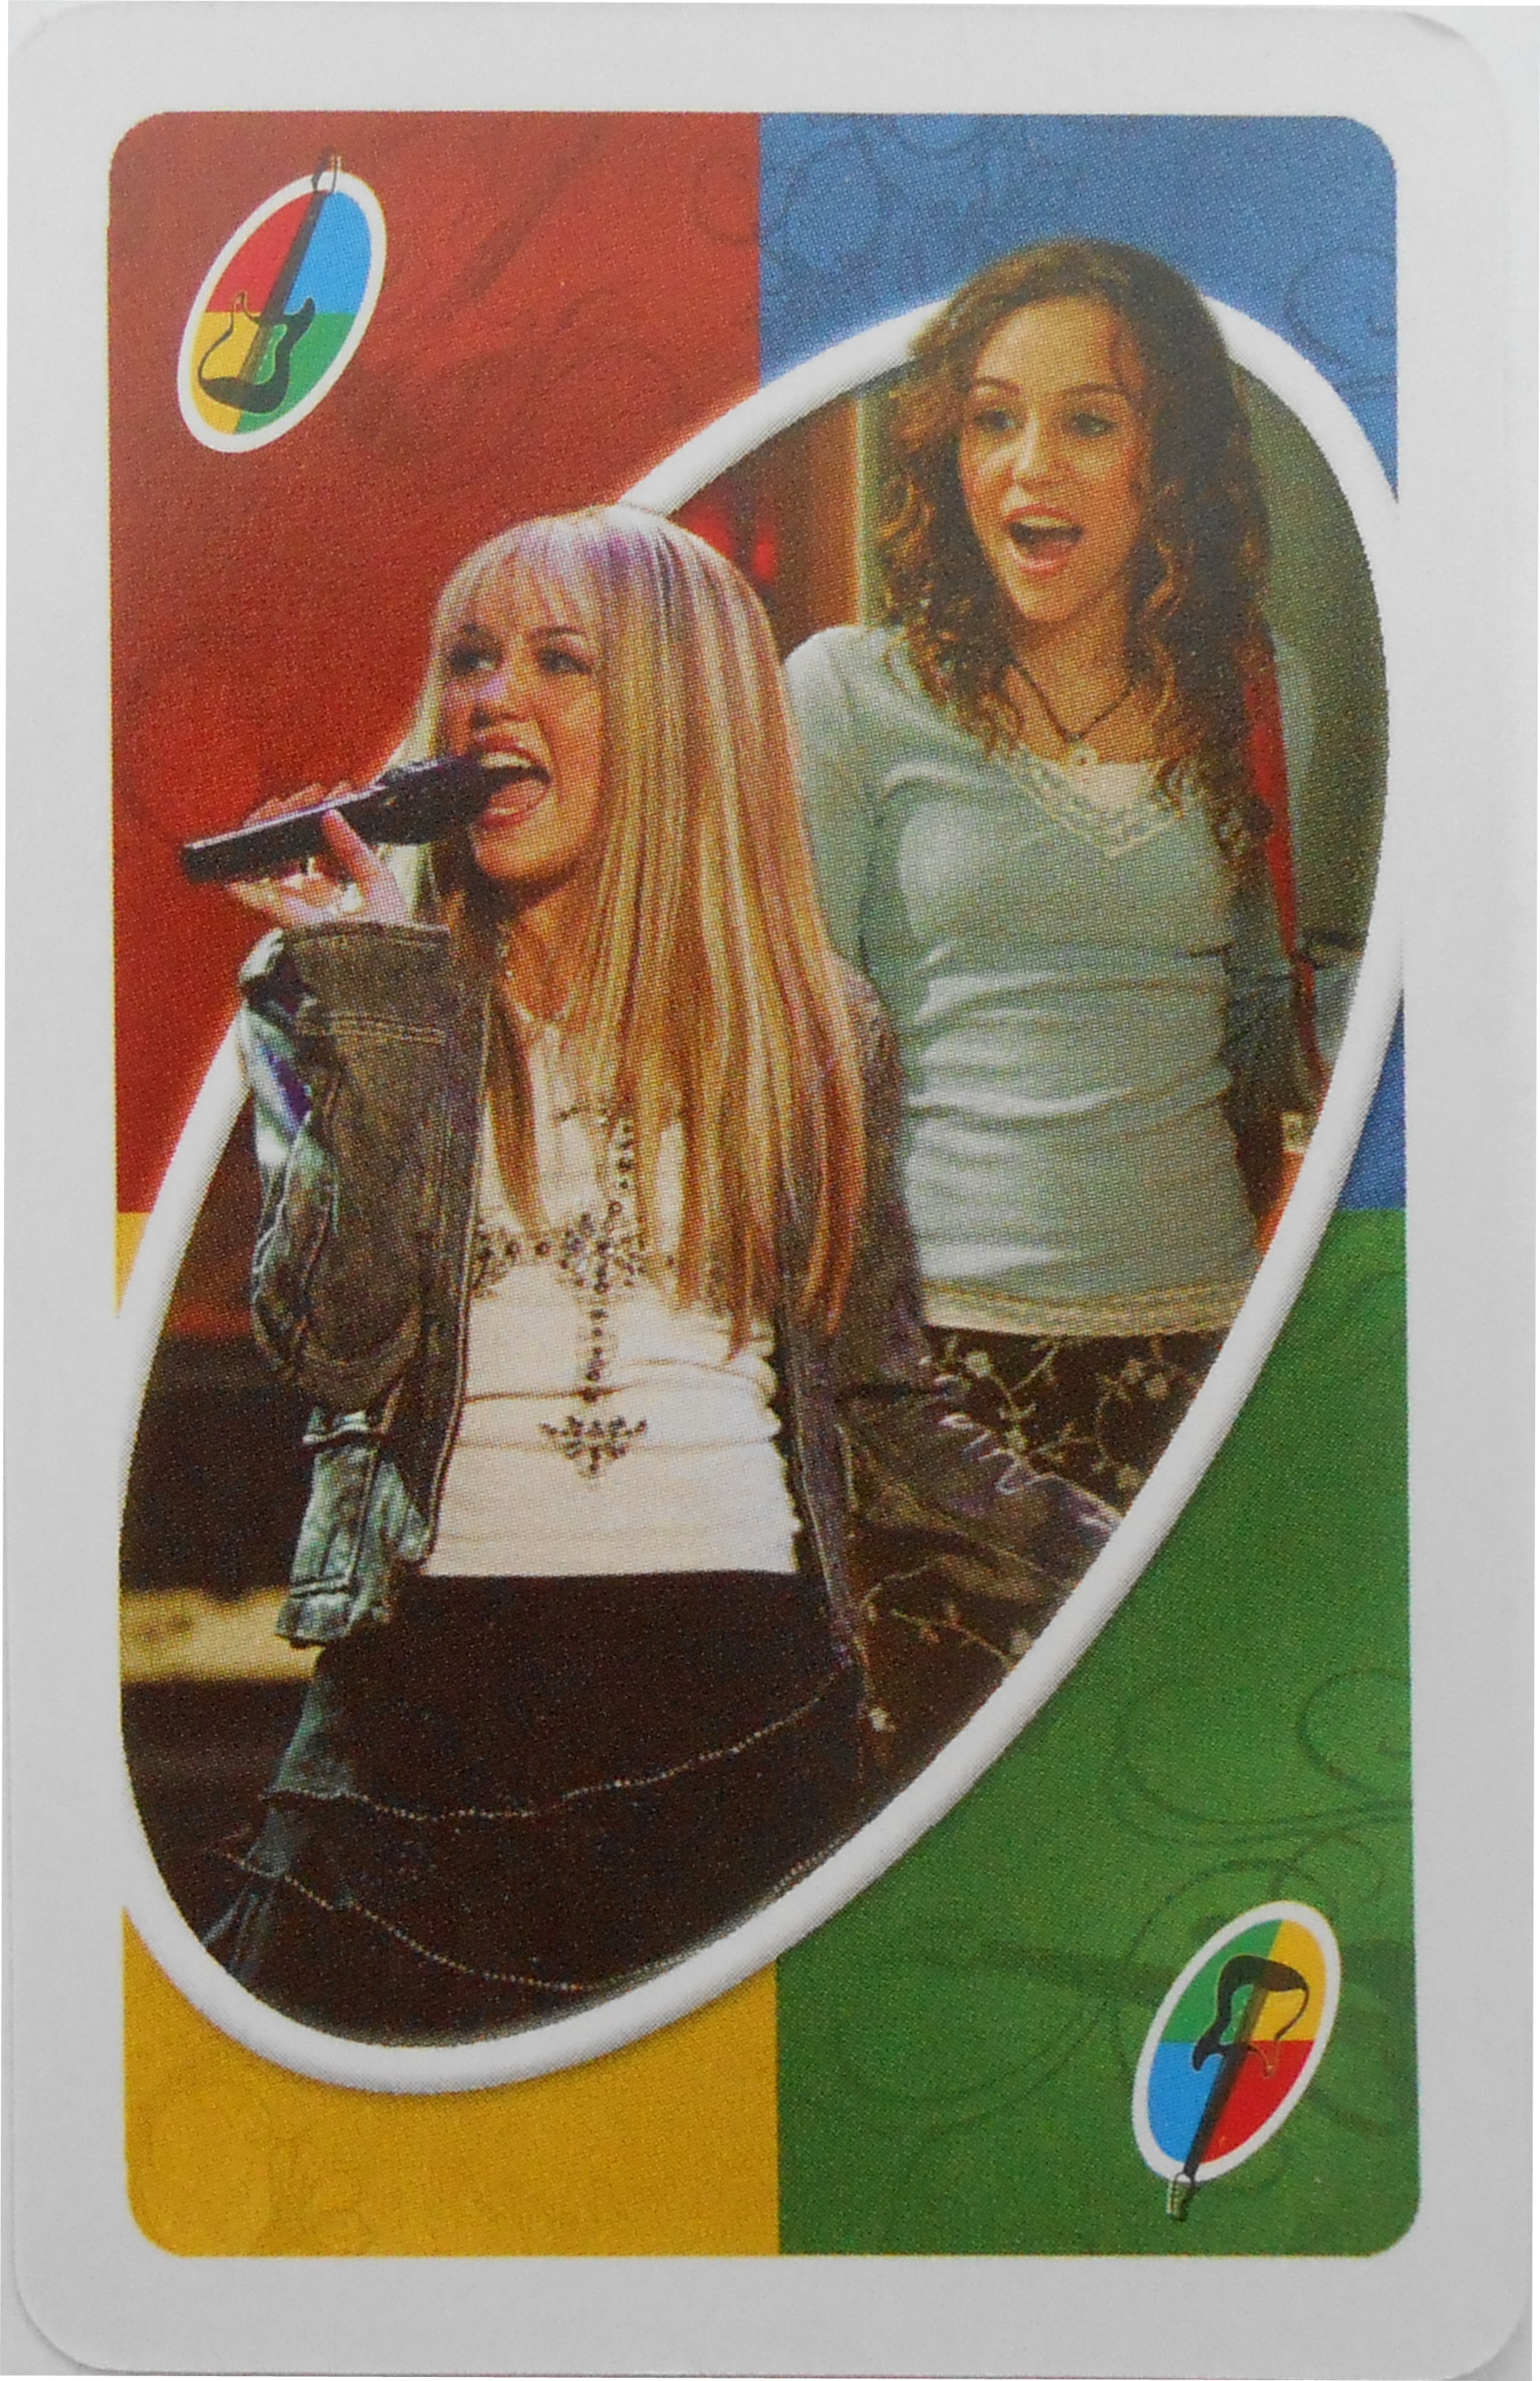 Hannah Montana Uno (Best of Both Worlds Wild Card)